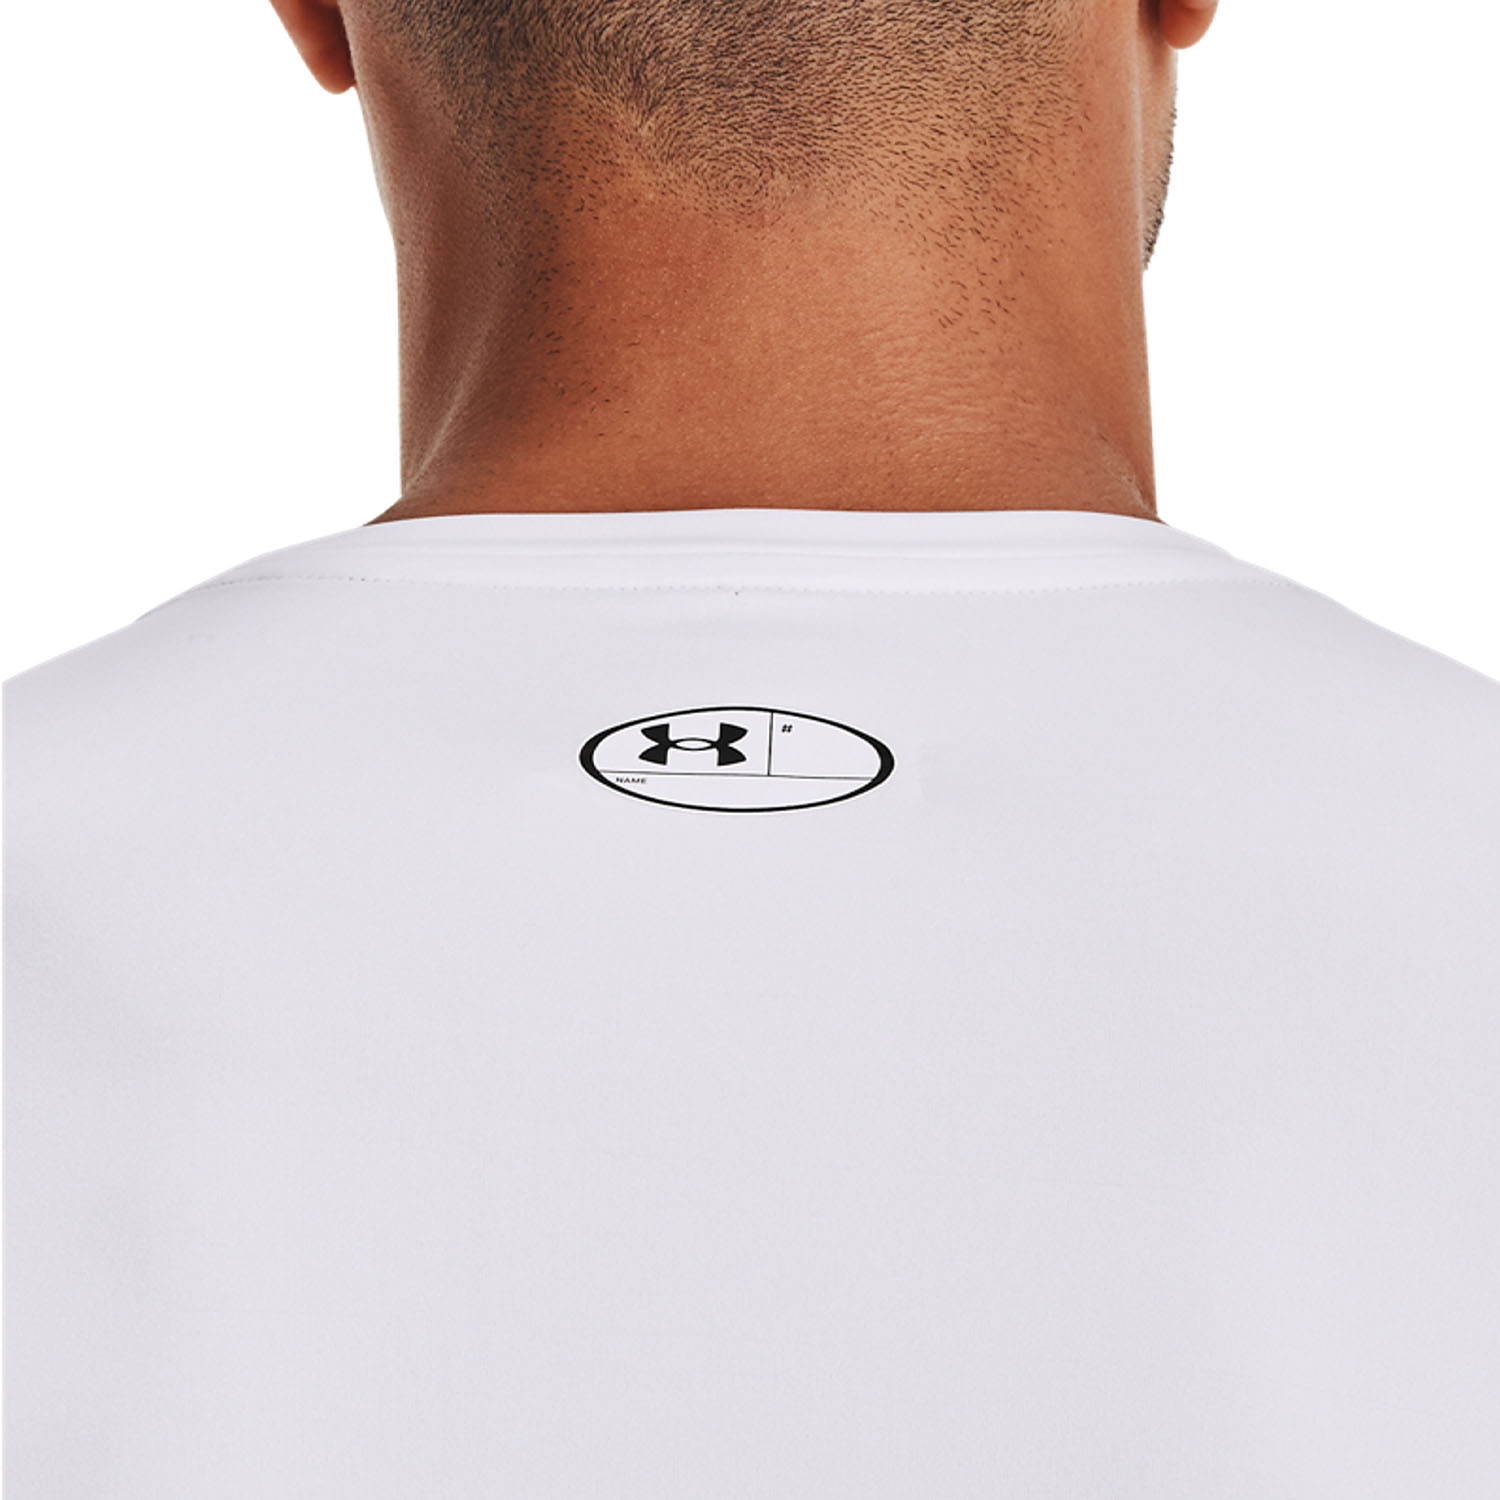 Under Armour HeatGear Logo Camisa - White/Black